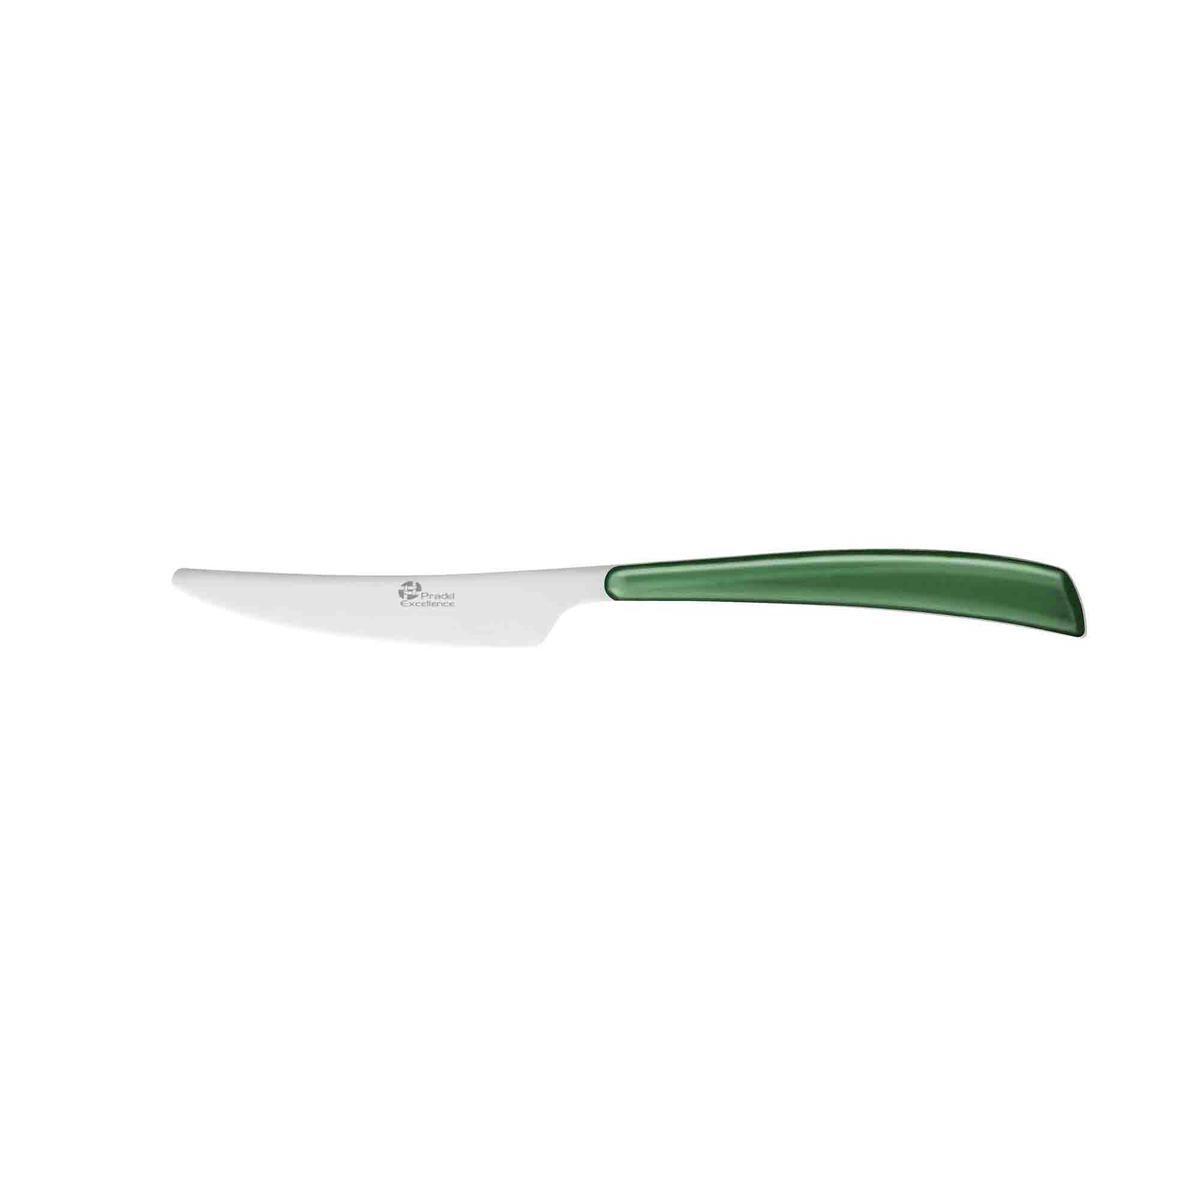 Couteau élégance vert - Acier inoxydable - 23,4 cm - Vert